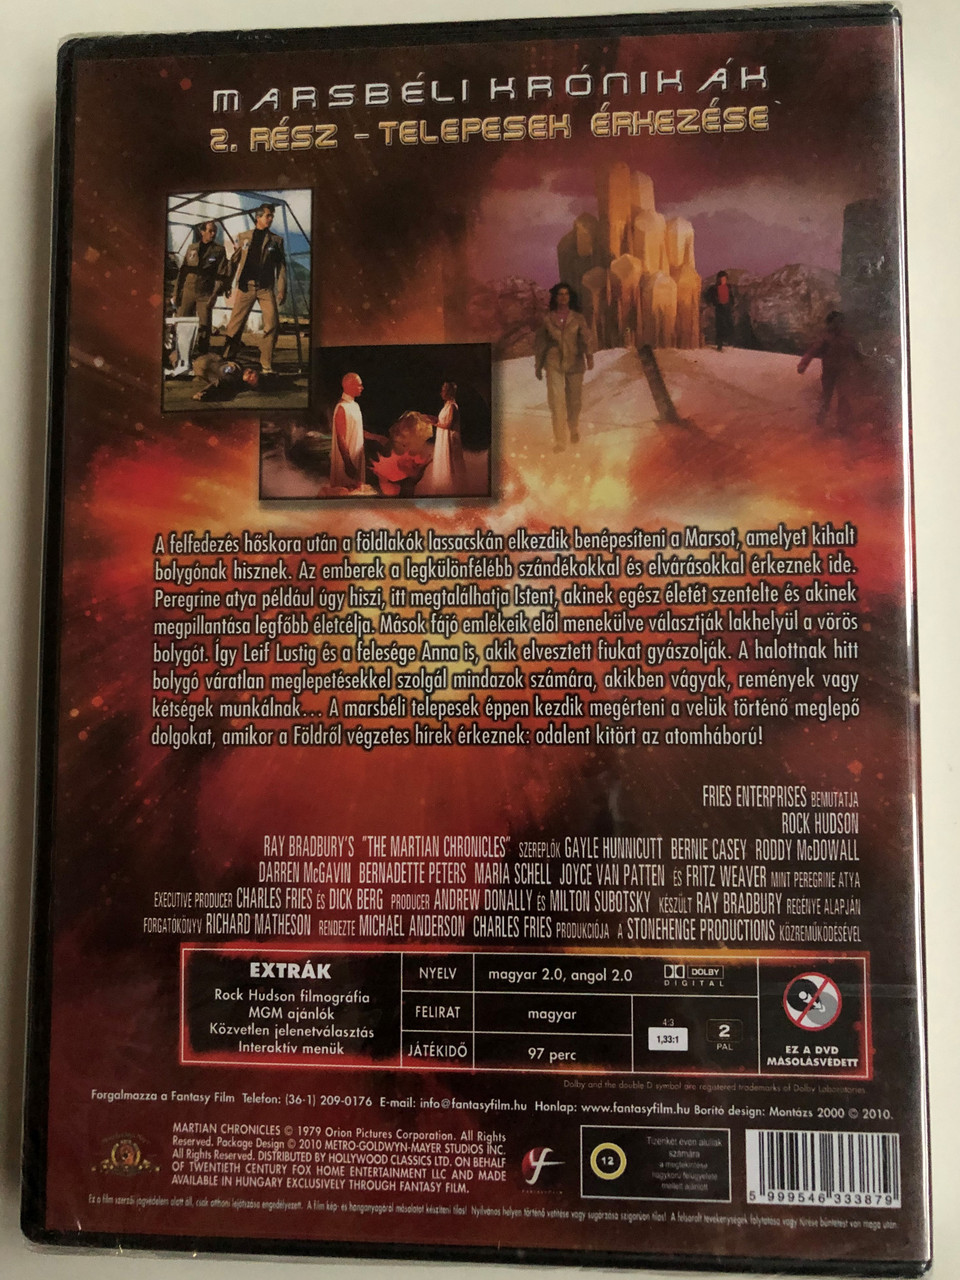 The Martian Chronicles Part 2 - The Settlers DVD 1980 Marsbéli krónikák 2.  rész - Telepesek érkezése / Directed by Michael Anderson / Starring: Rock  Hudson, Gayle Hunnicutt, Bernie Casey, Roddy McDowall,